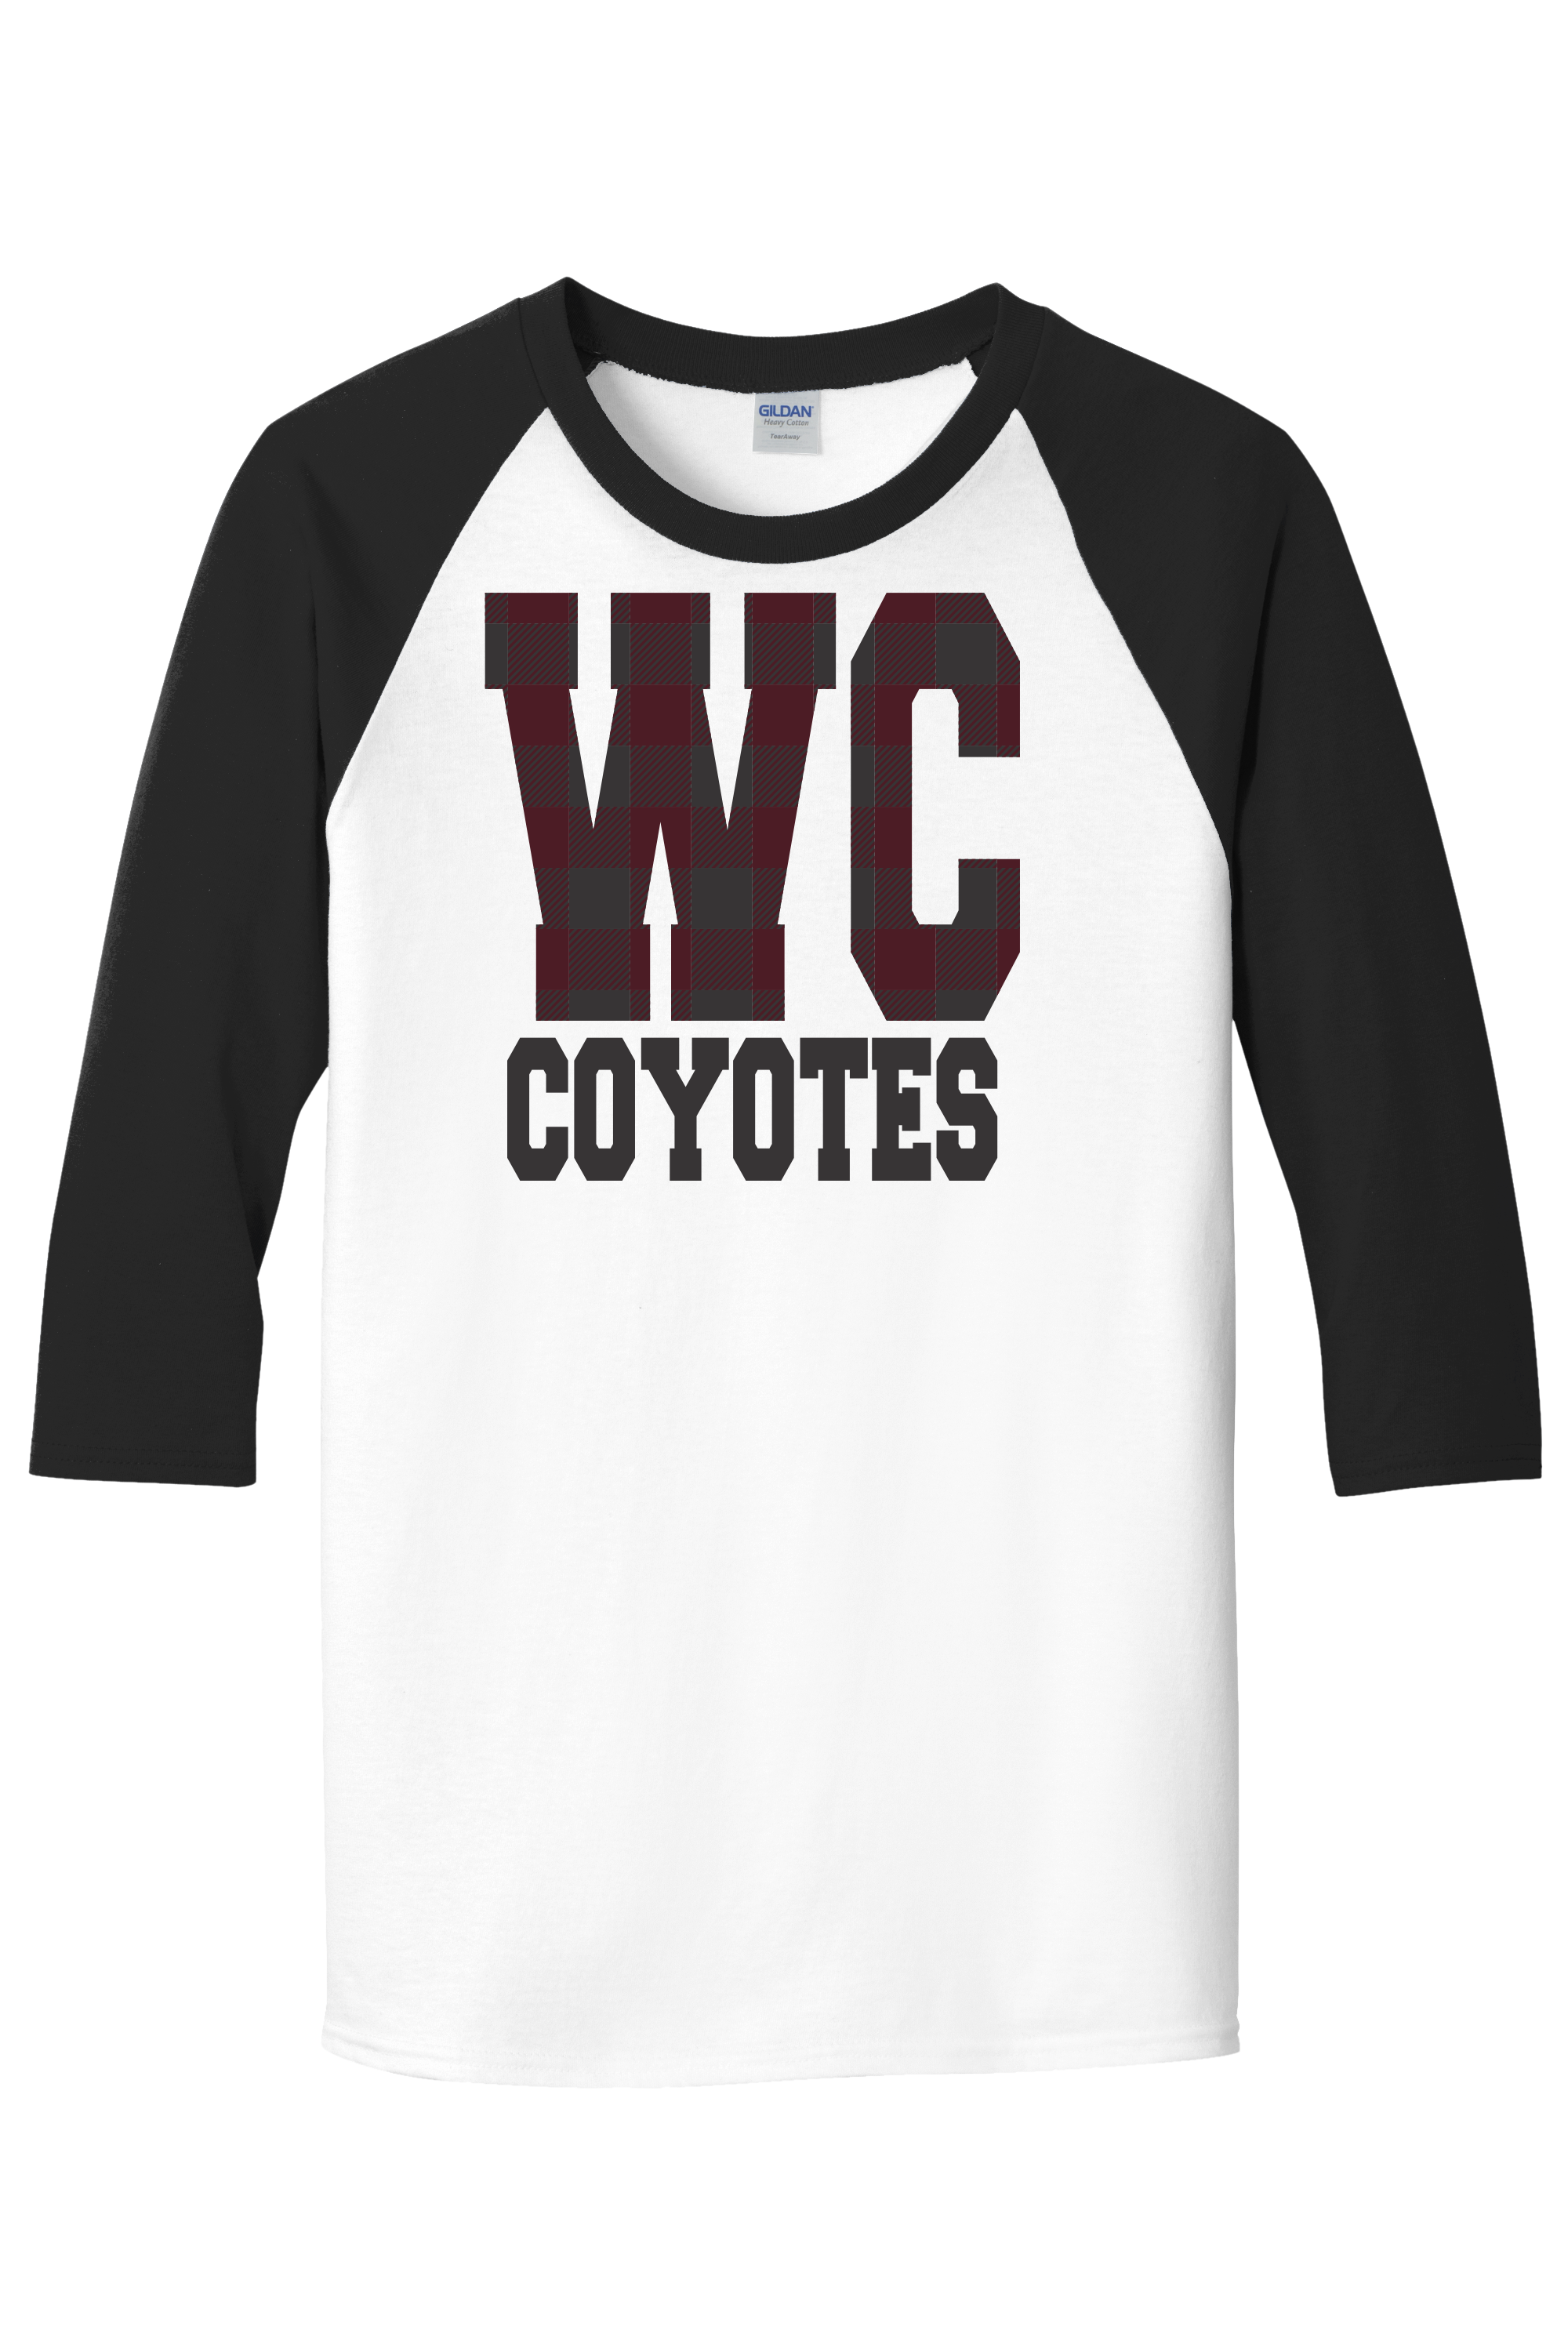 West Creek Coyotes 3/4 Buffalo Plaid Raglan